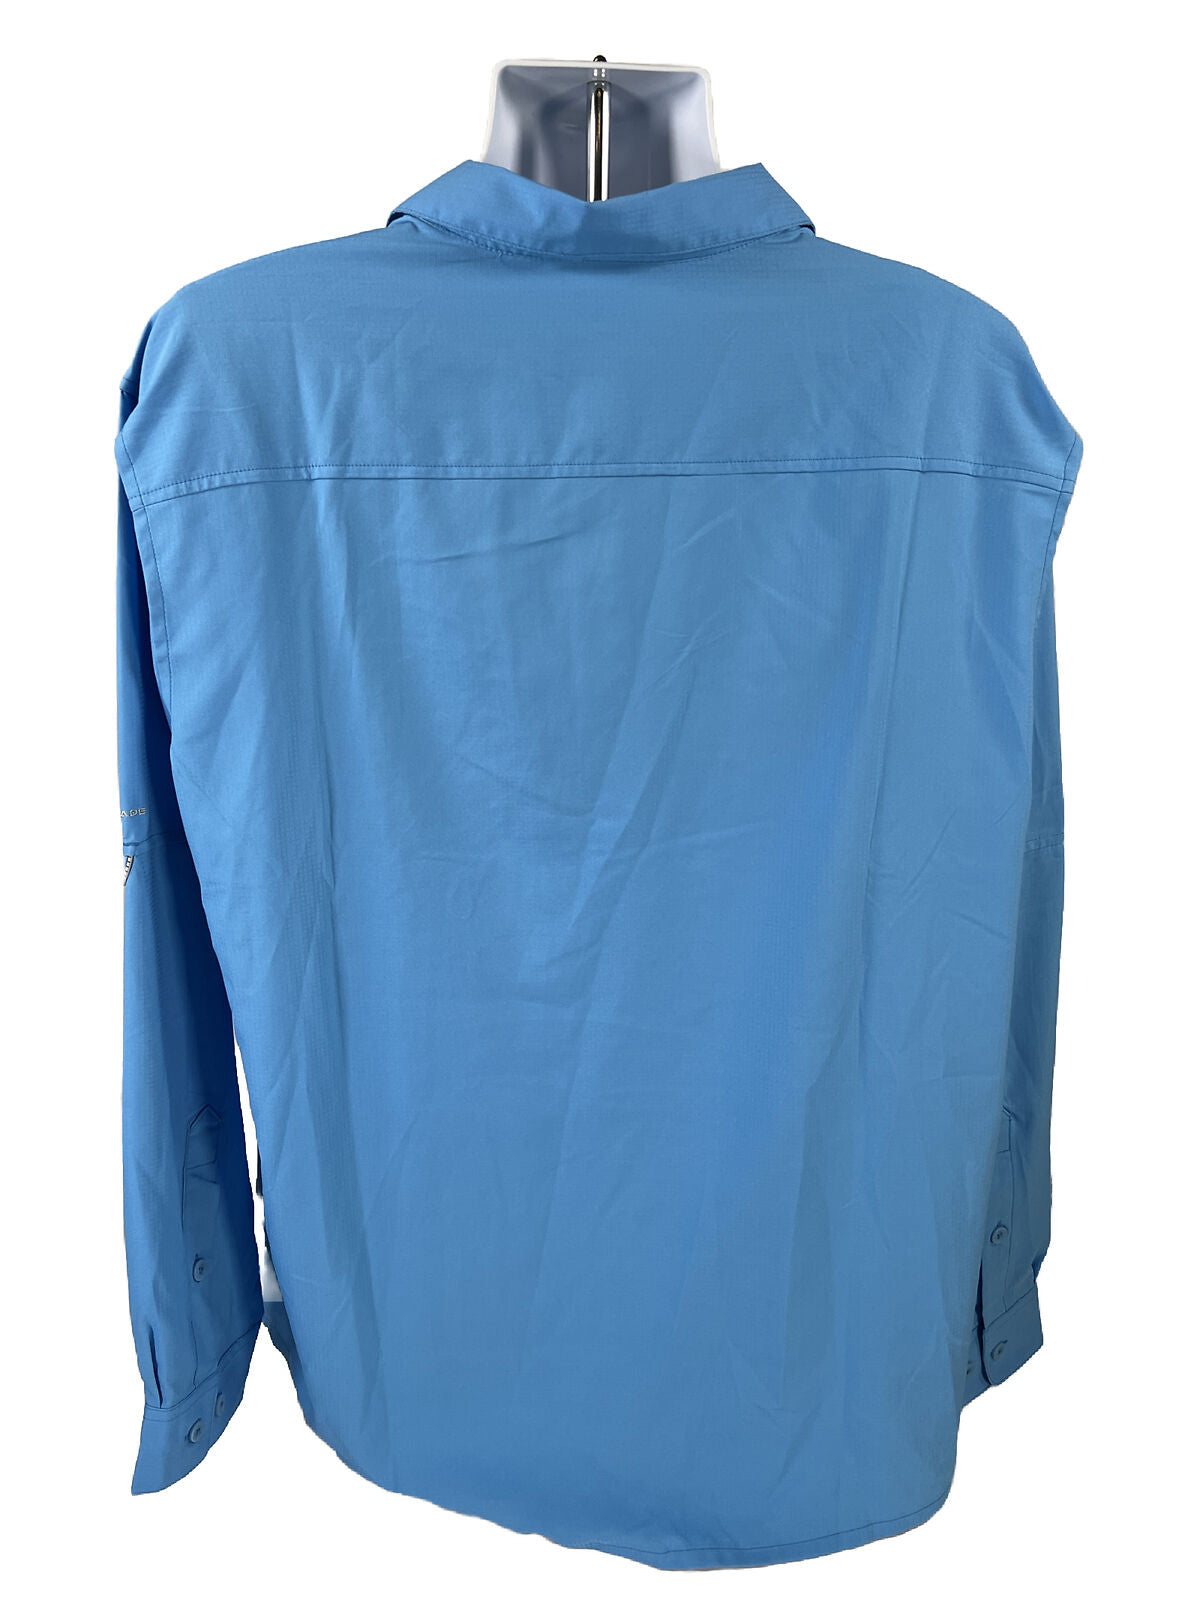 Columbia Men's Blue PFG Long Sleeve Button Up Casual Shirt - XL